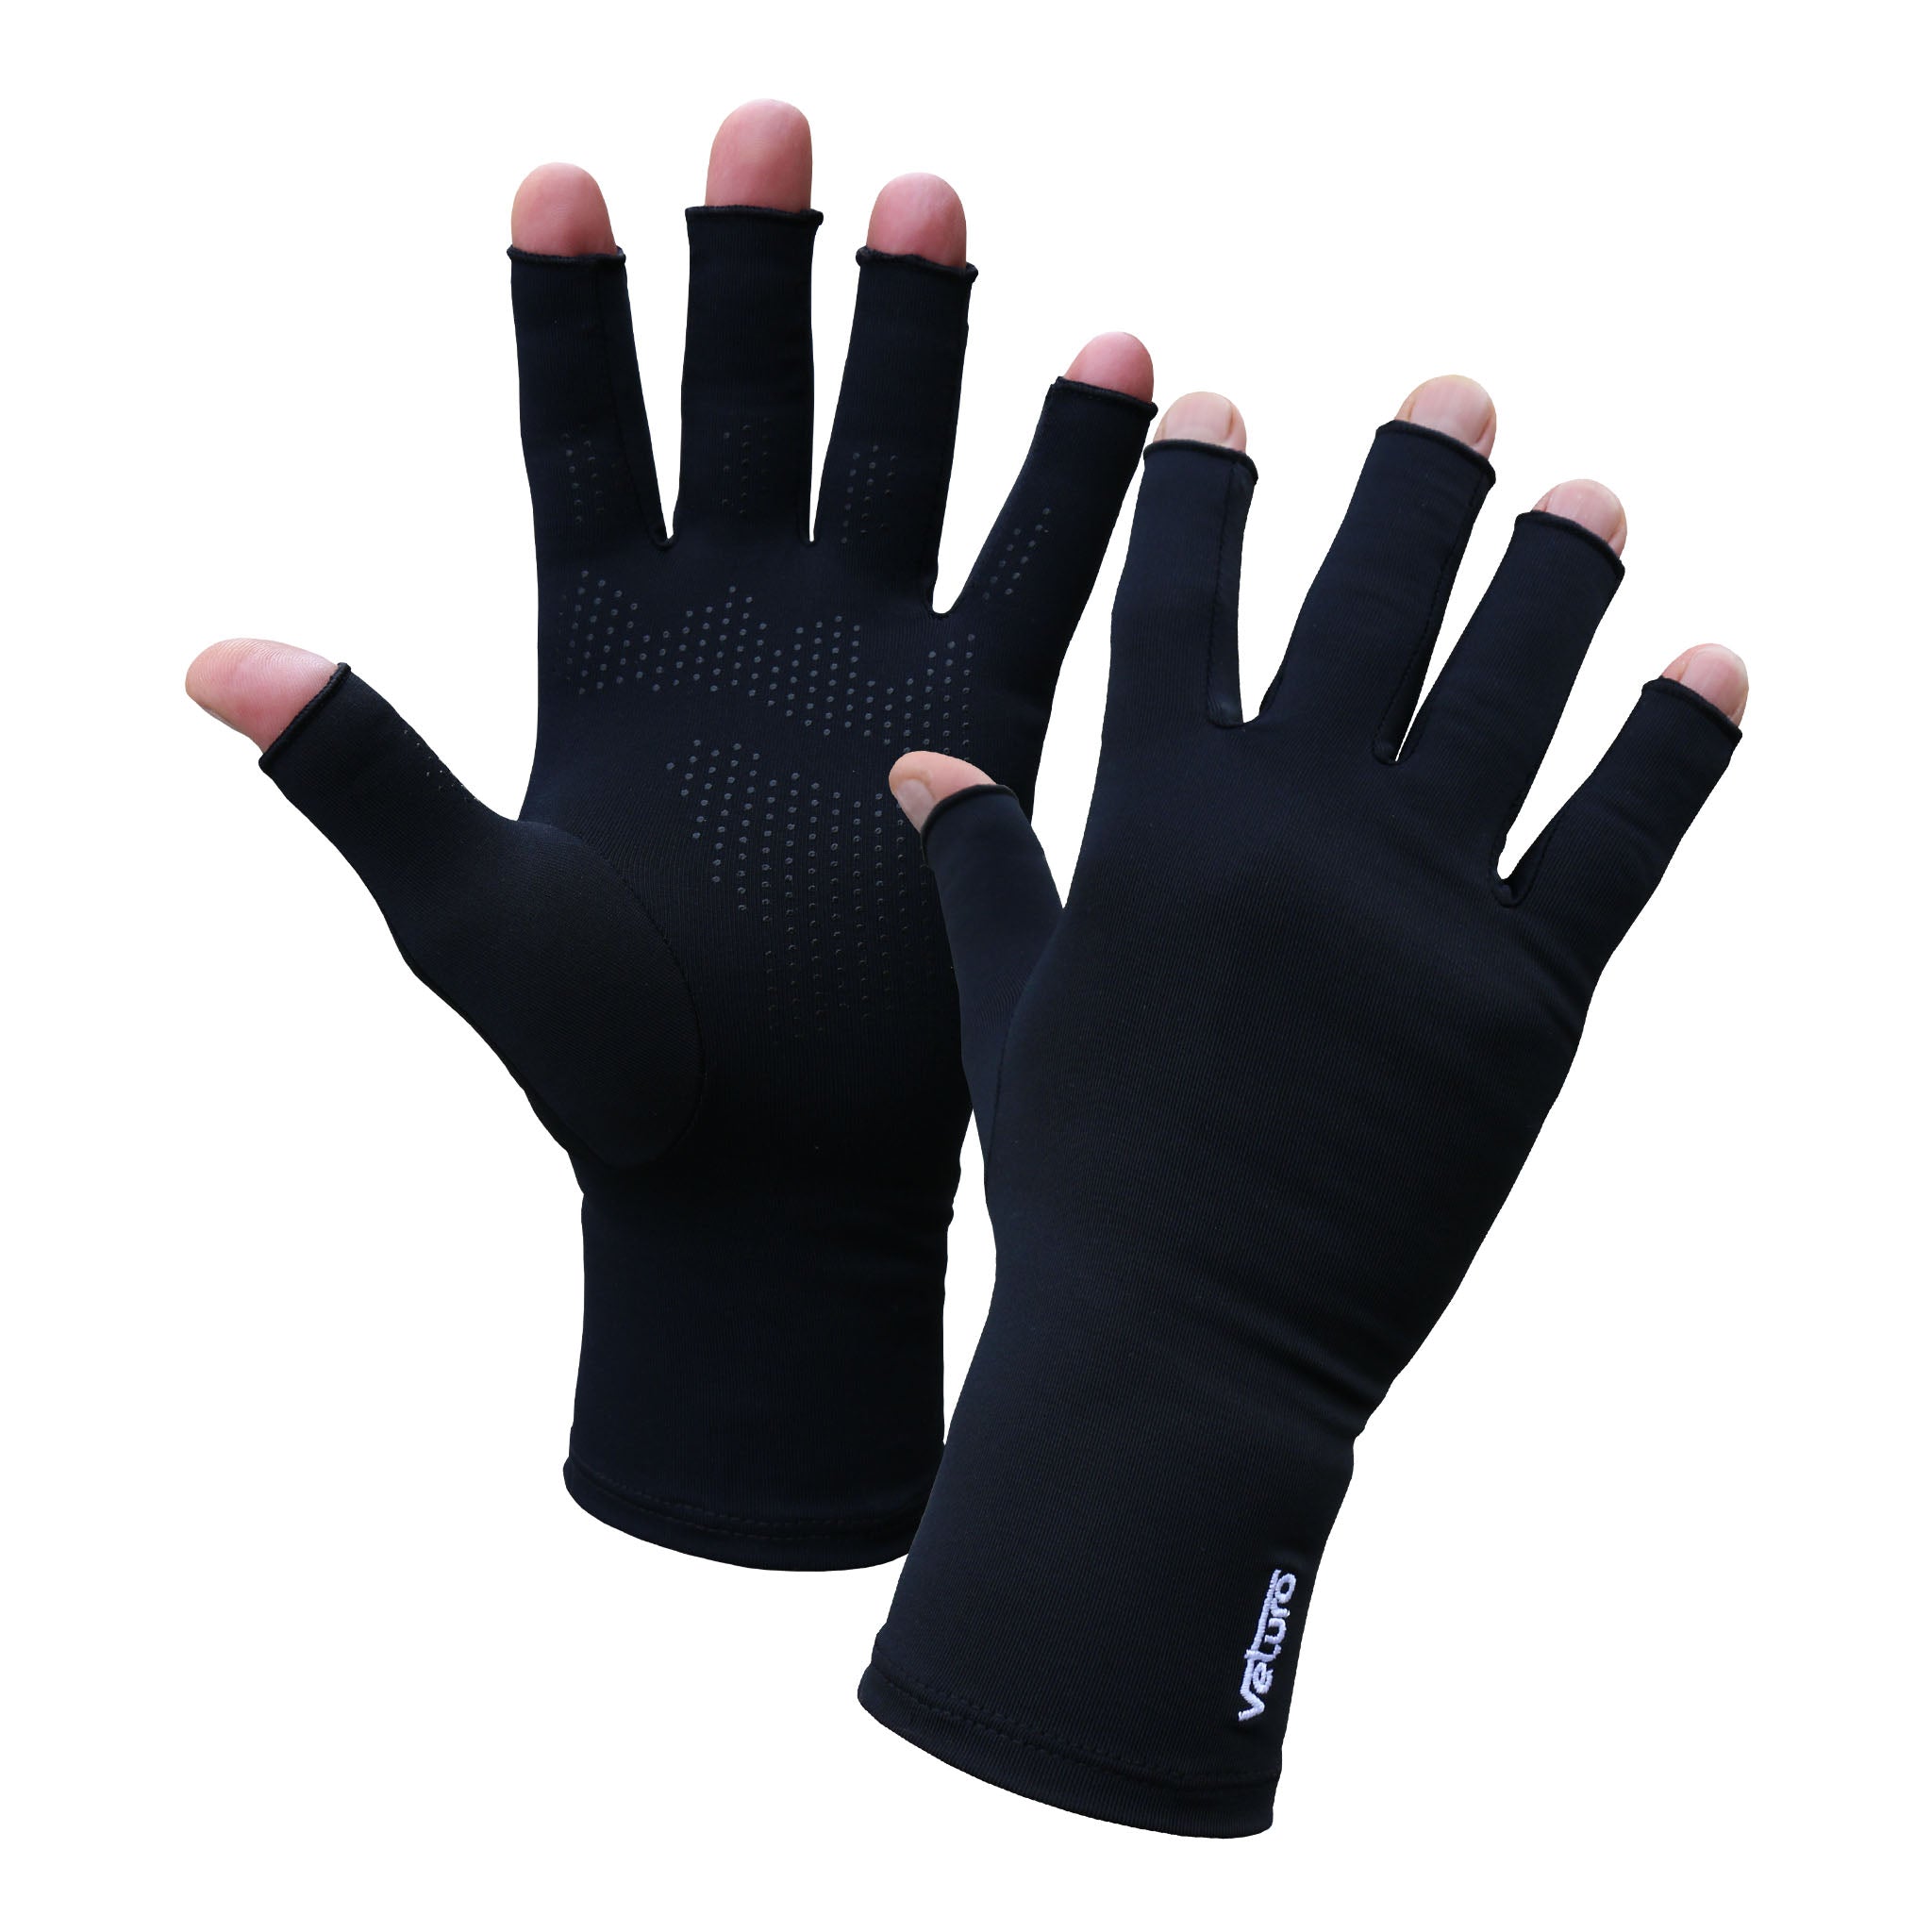 Pair of Compression Fingerless Arthritis Gloves